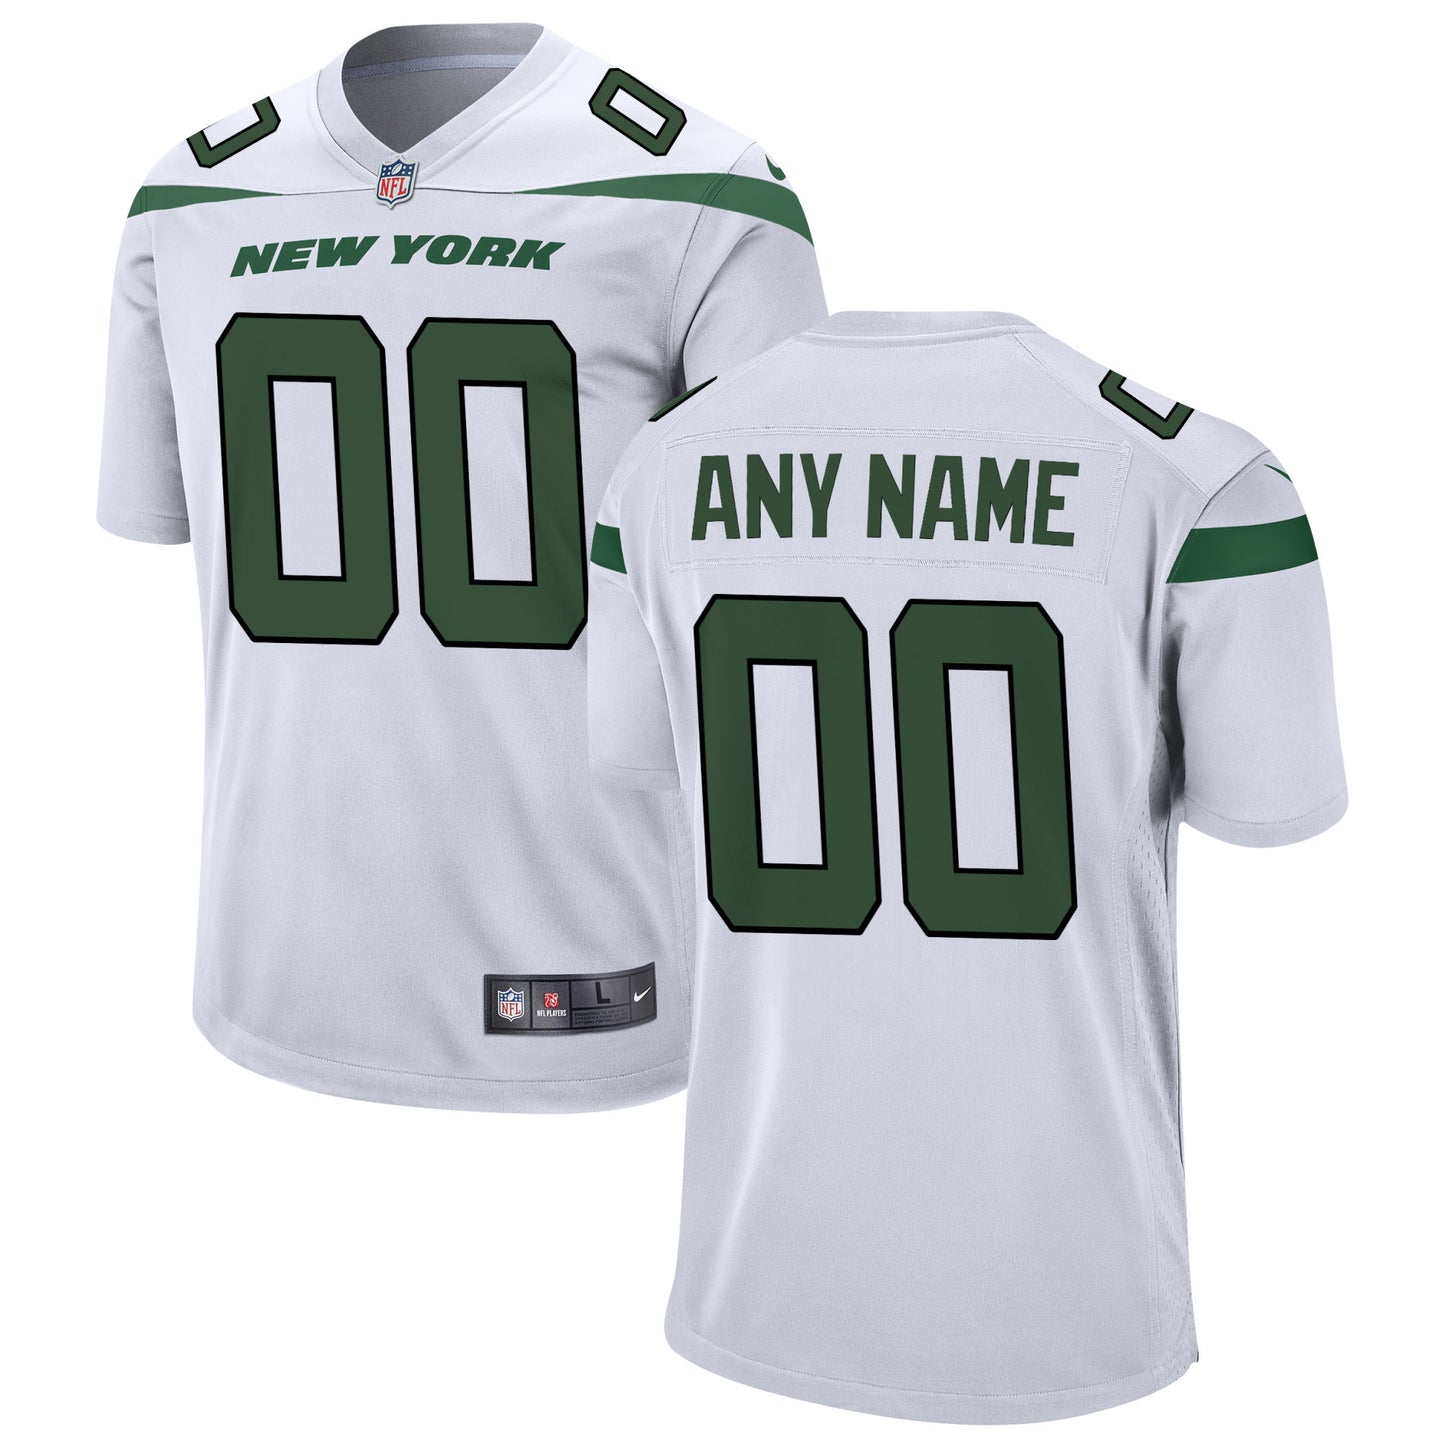 New York Jets Nike Youth Custom Game Jersey - White